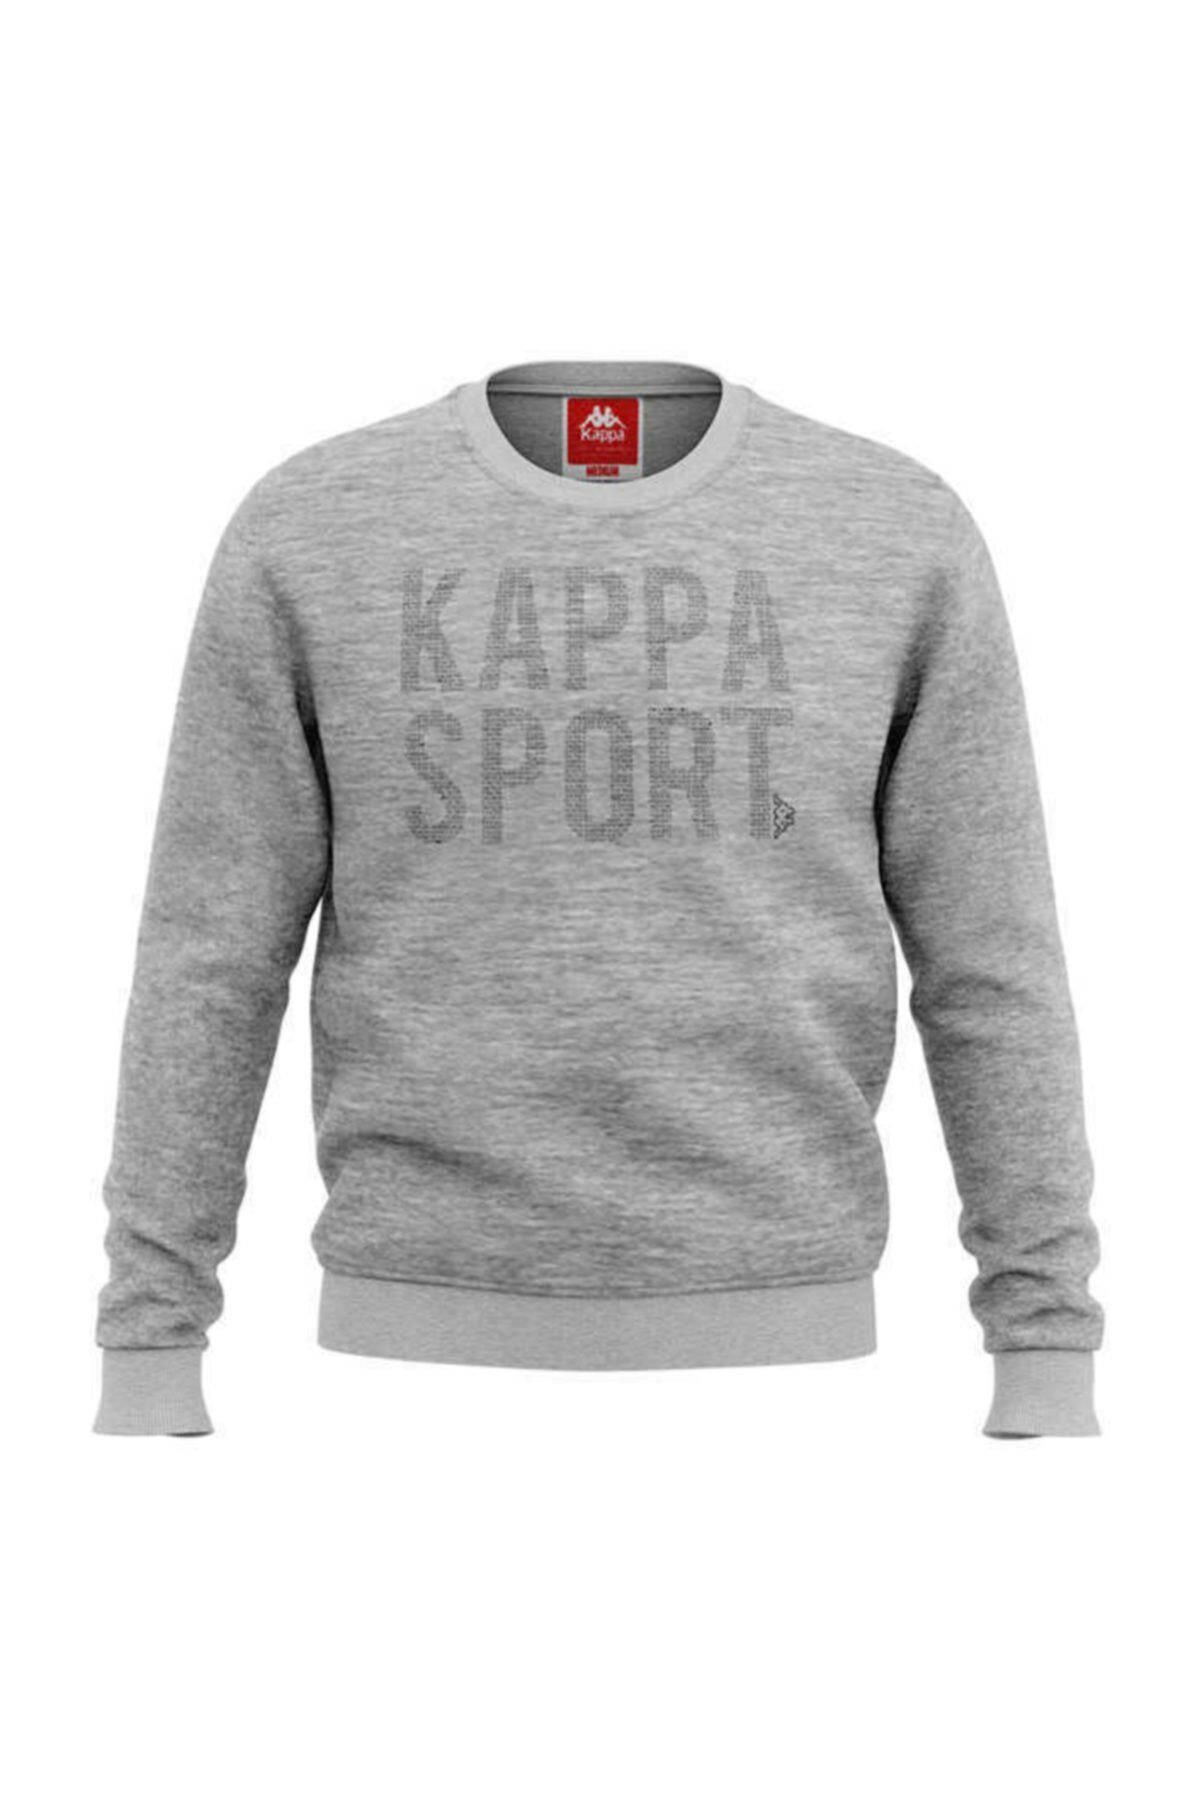 Kappa Erkek Sweatshirt Bak 1 304s6l0